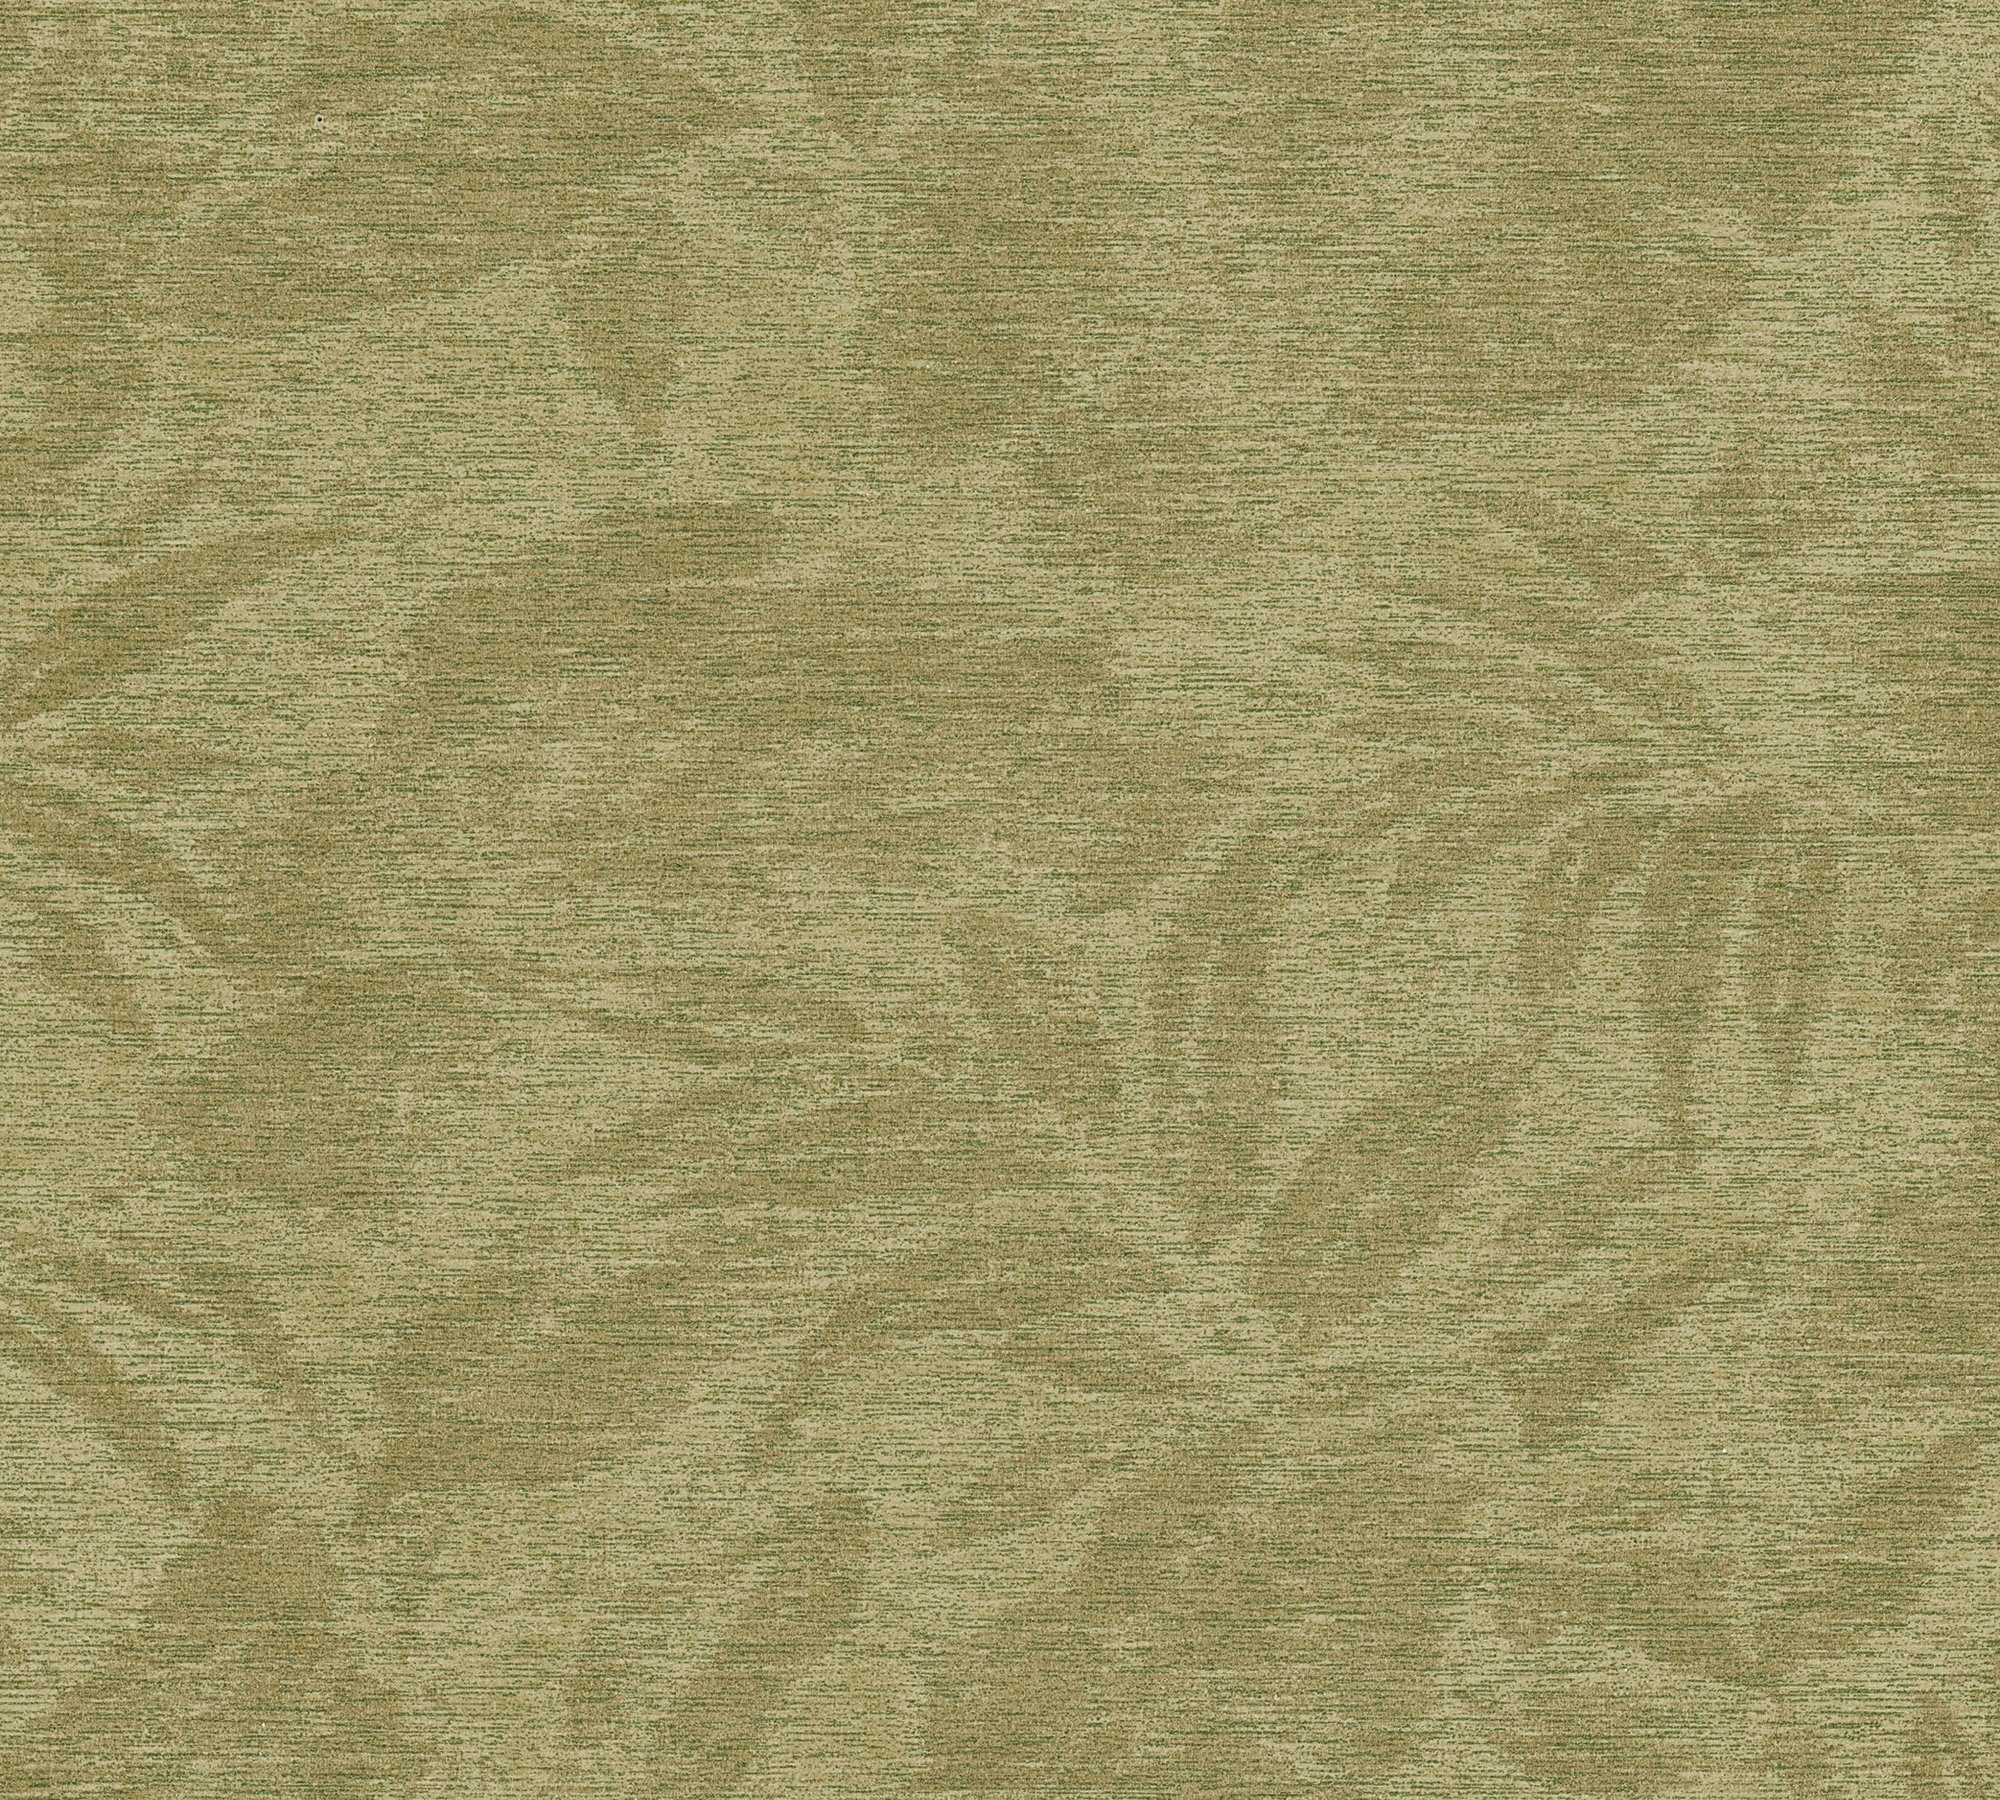 A.S. Création Vliestapete Greenery mit Blätter grün/beige Palmentapete Dschungel Motiv, Tapete floral